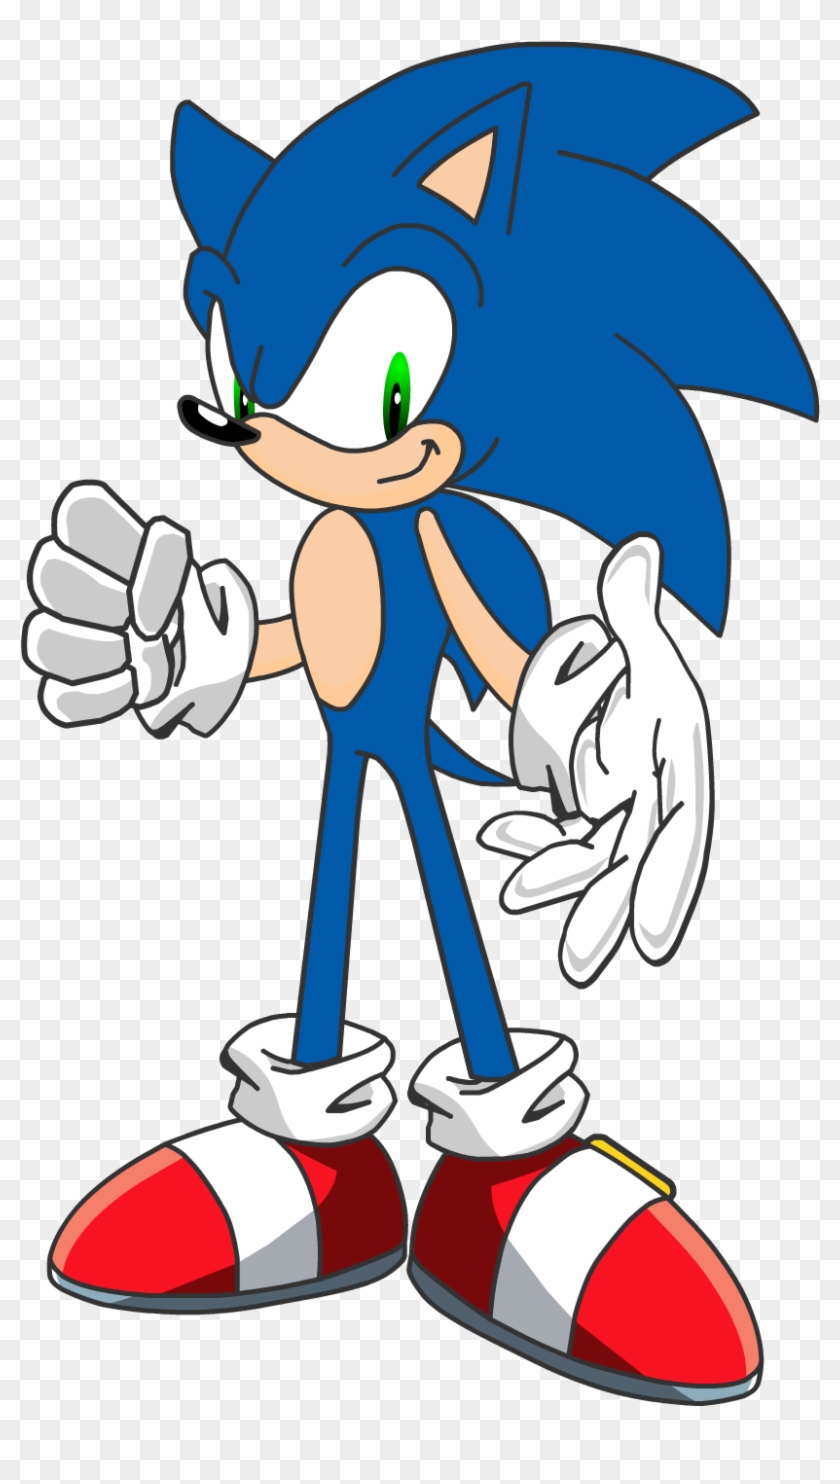 Sonic The Hedgehog Vector Art By Fireball-stars - Sonic The Hedgehog Vector Art #945689